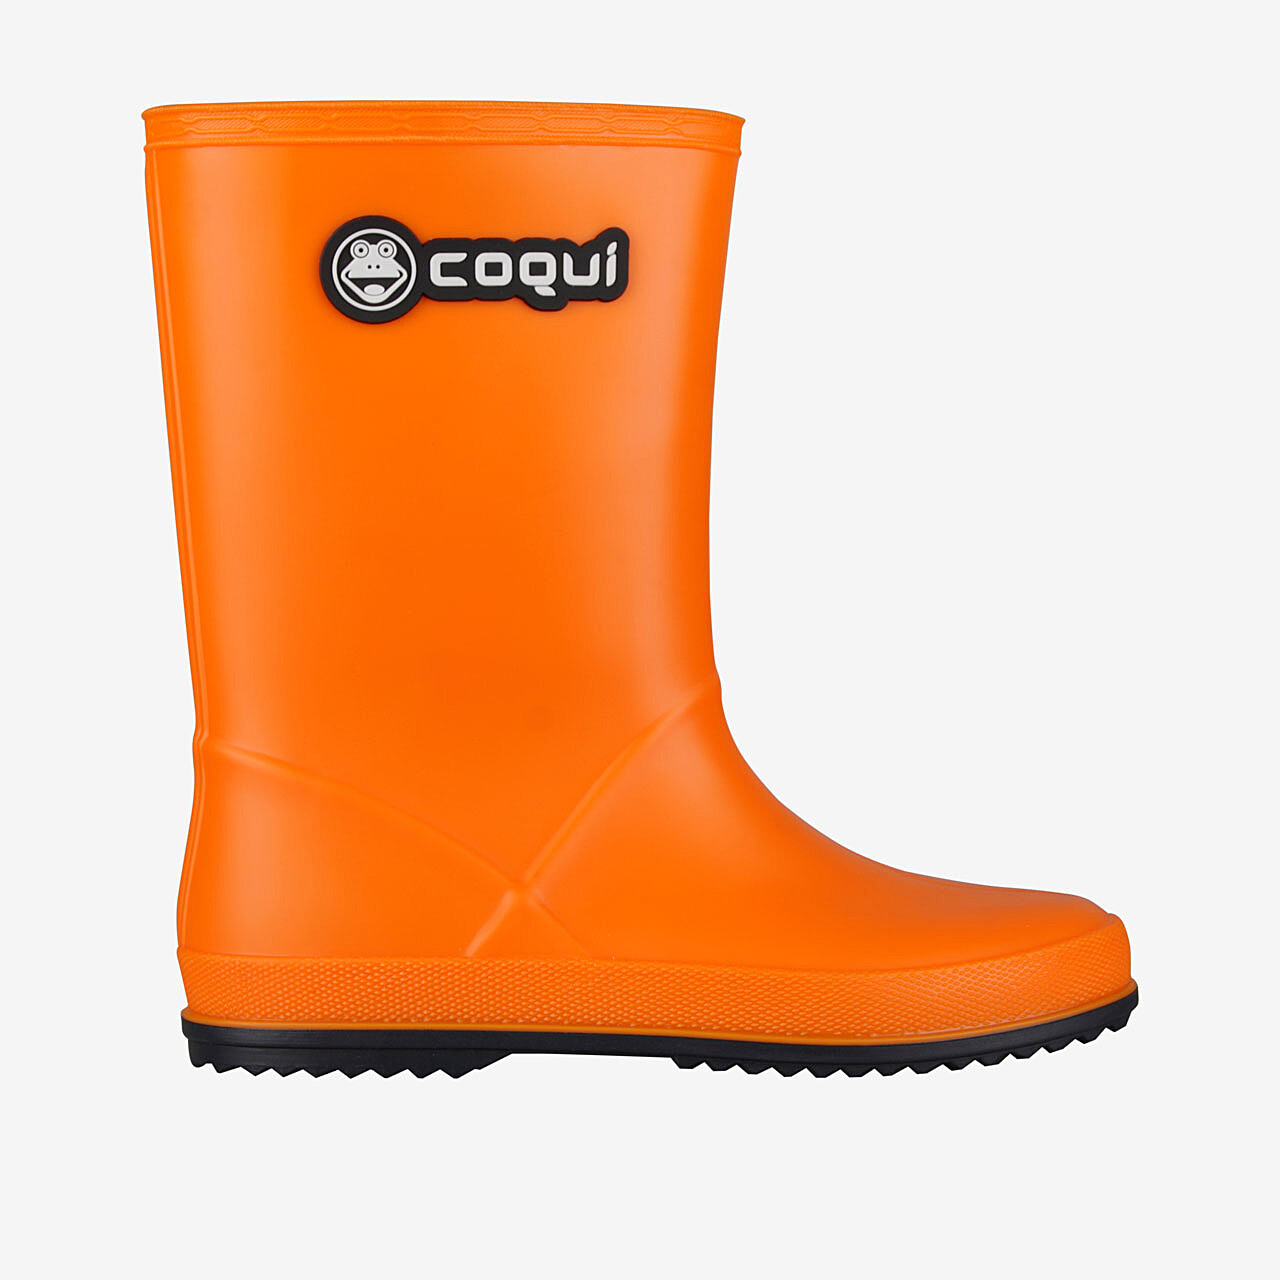 coqui boots